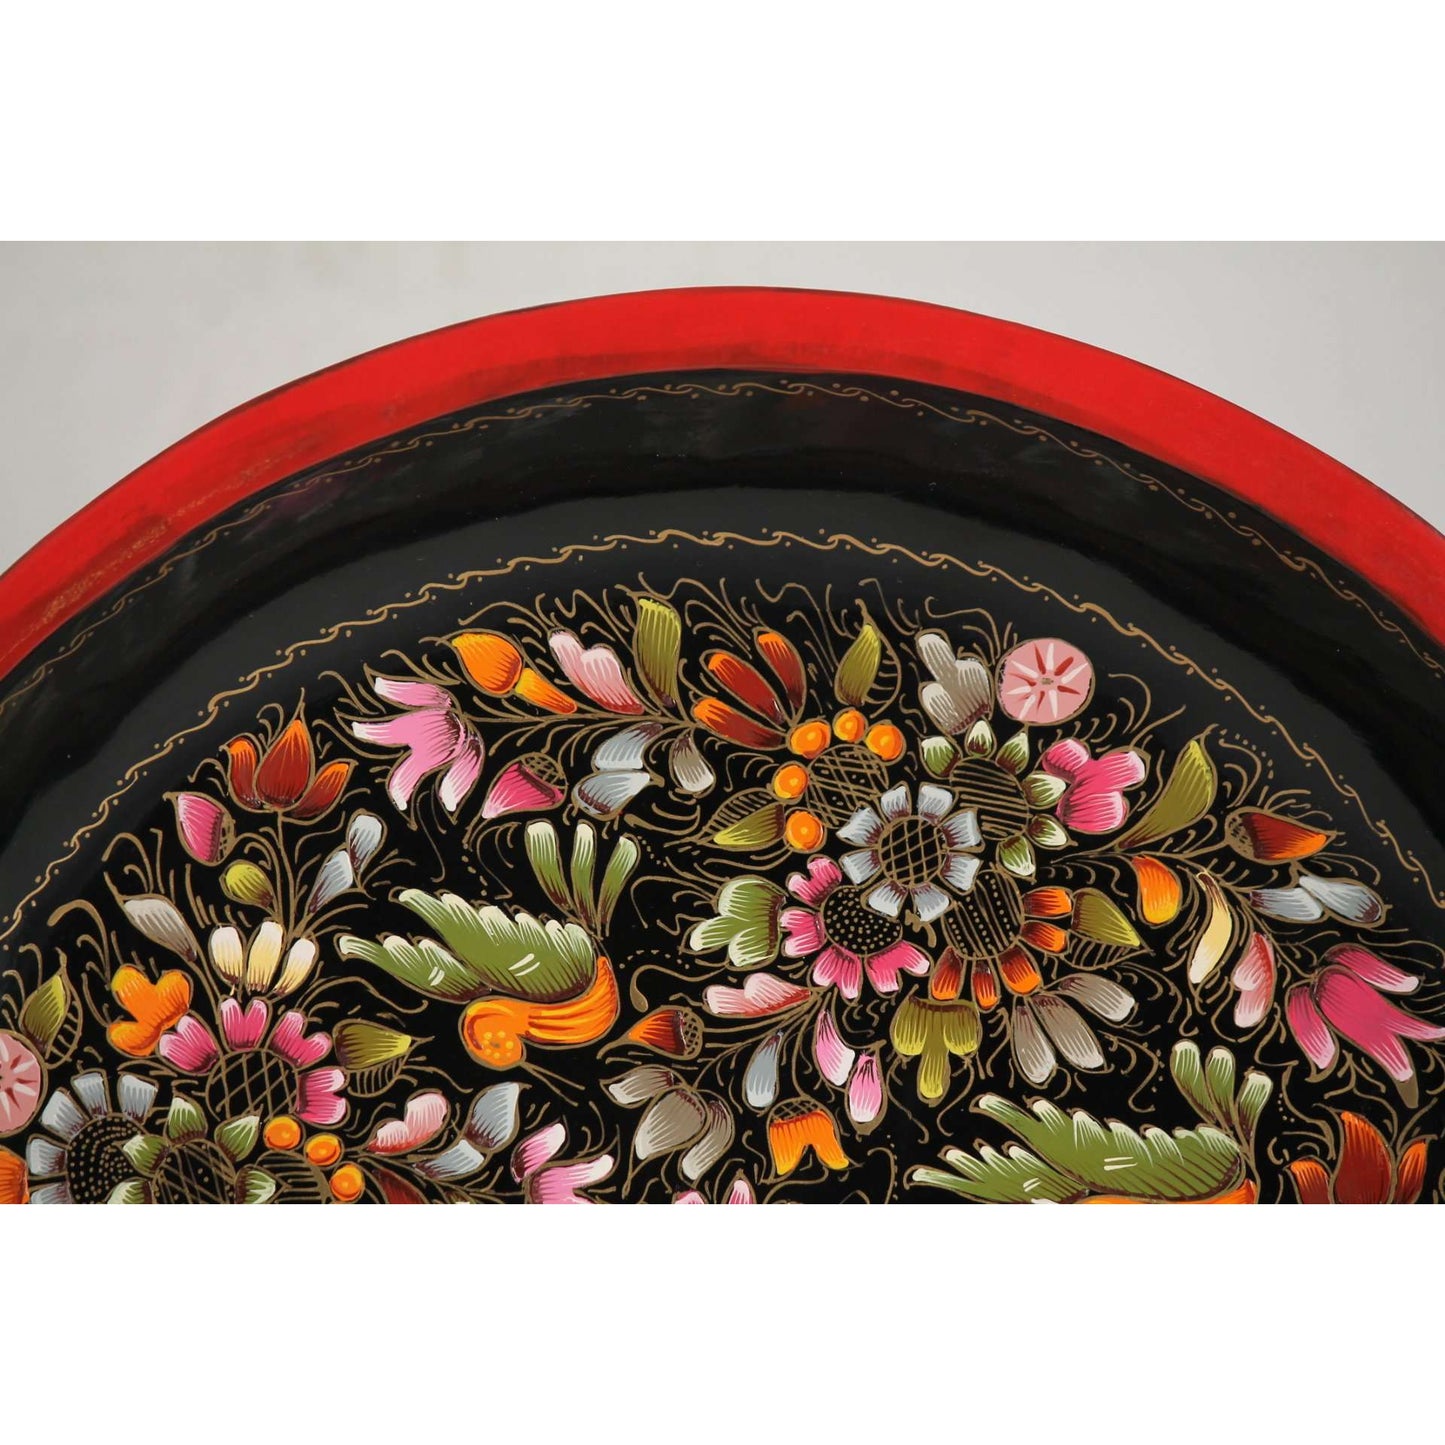 Wood Plate/Lacquer Ware Folk Art Mexico Collectible Decor Award Winning Artisan